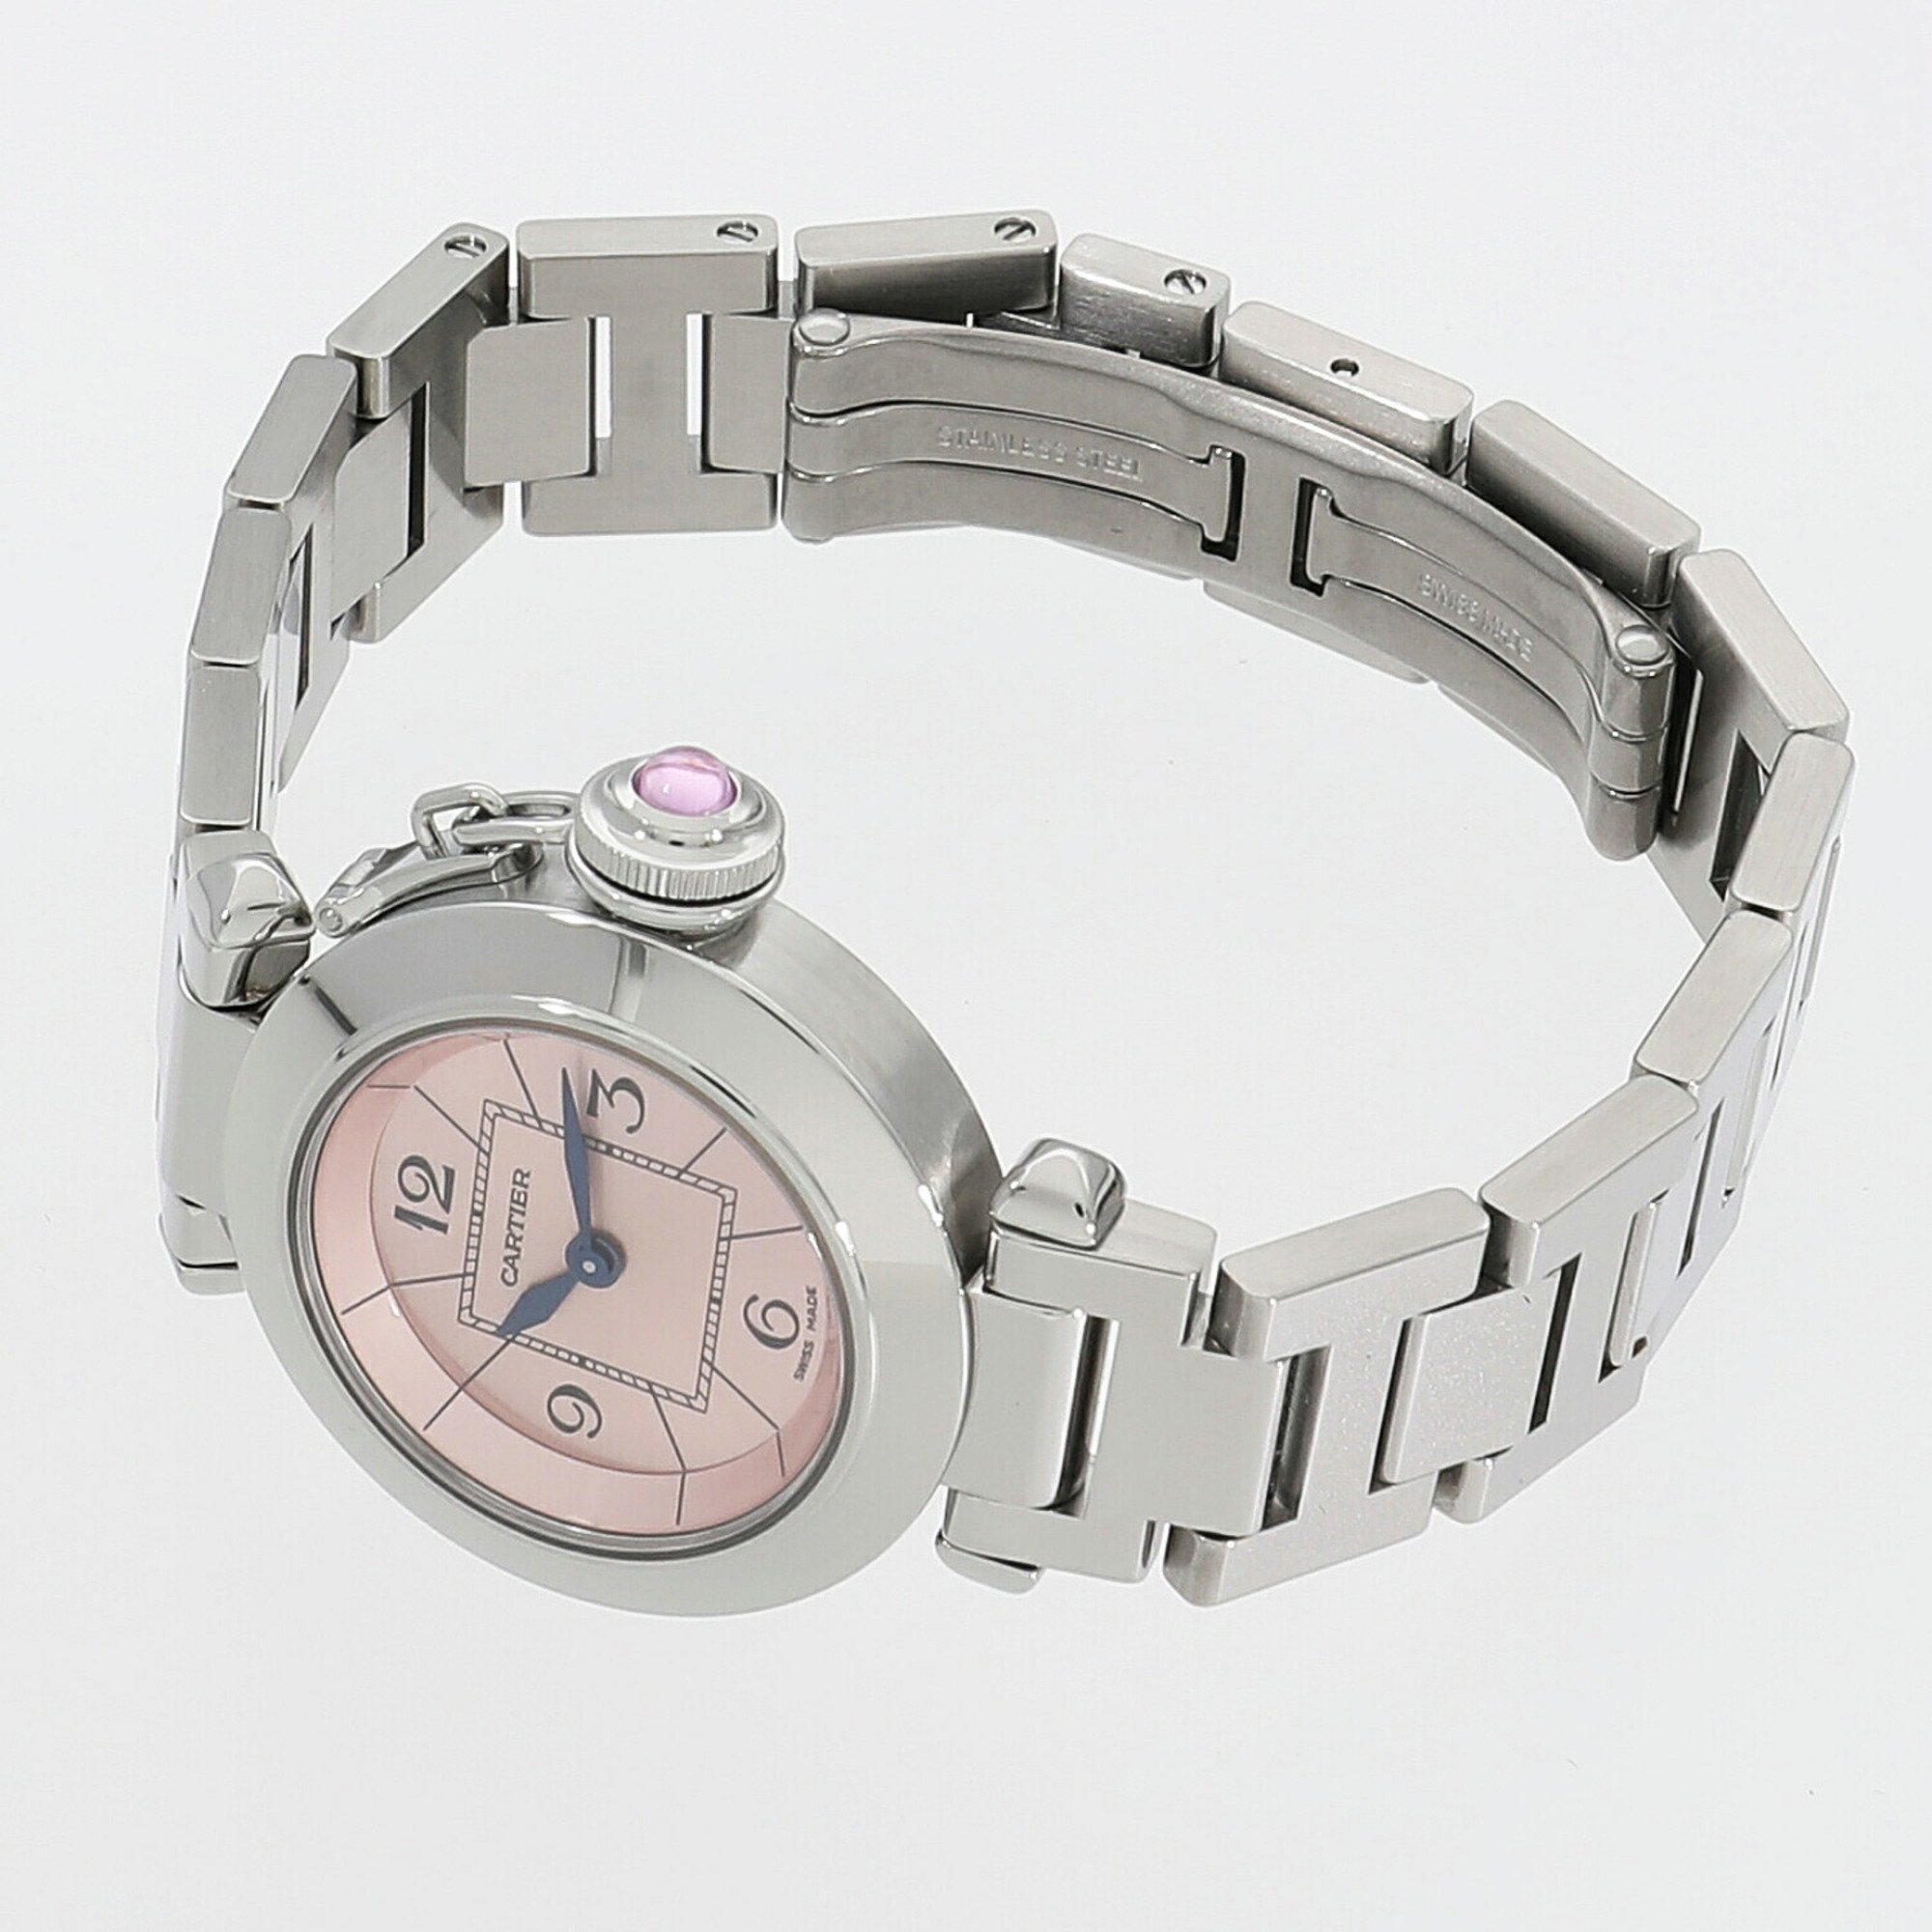 Cartier Miss Pasha W3140008 Pink Ladies Watch